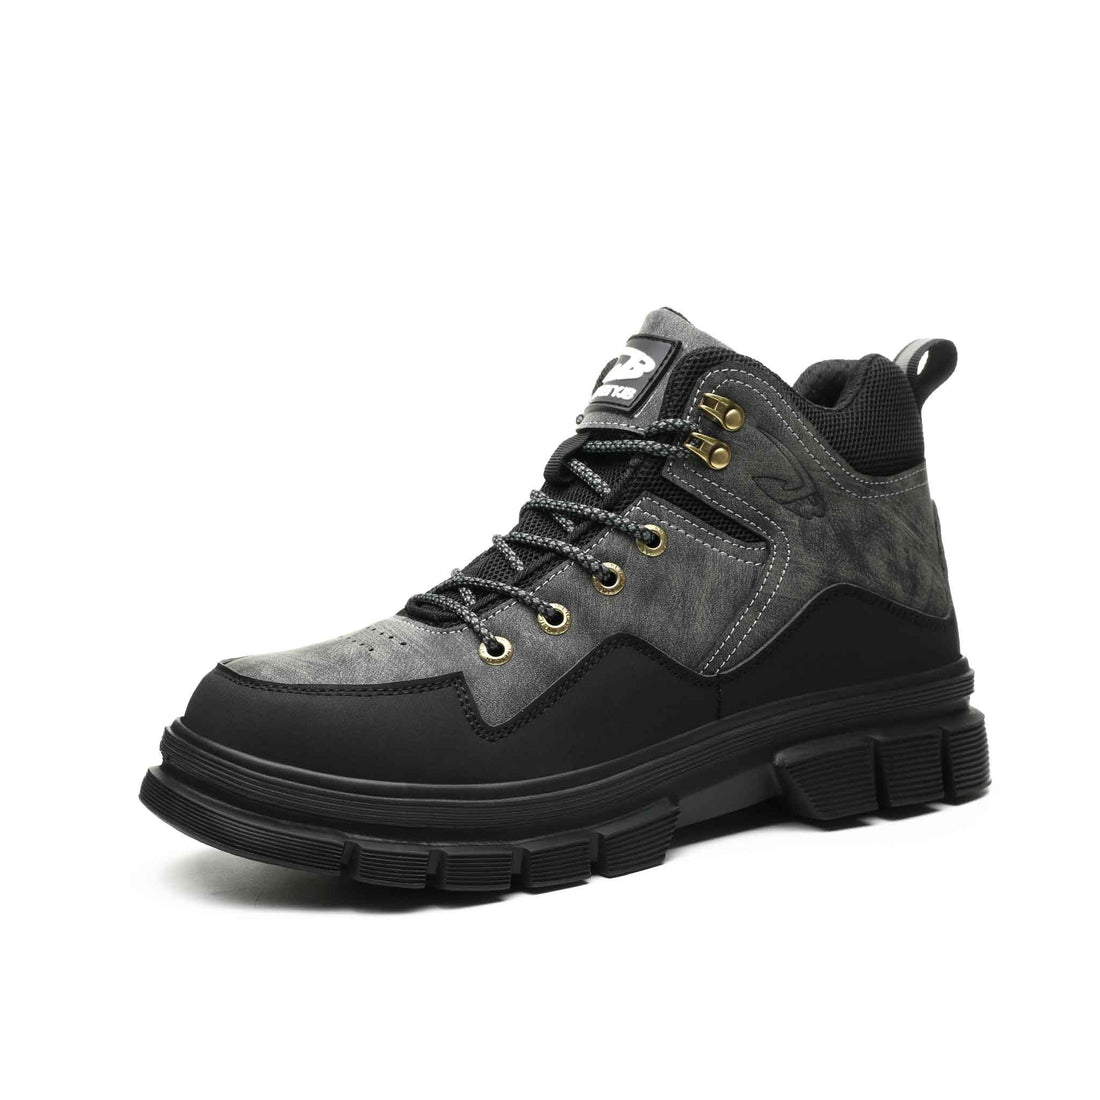 Men's Insulated Steel Toe Work Boots - Wear Resistant | B301